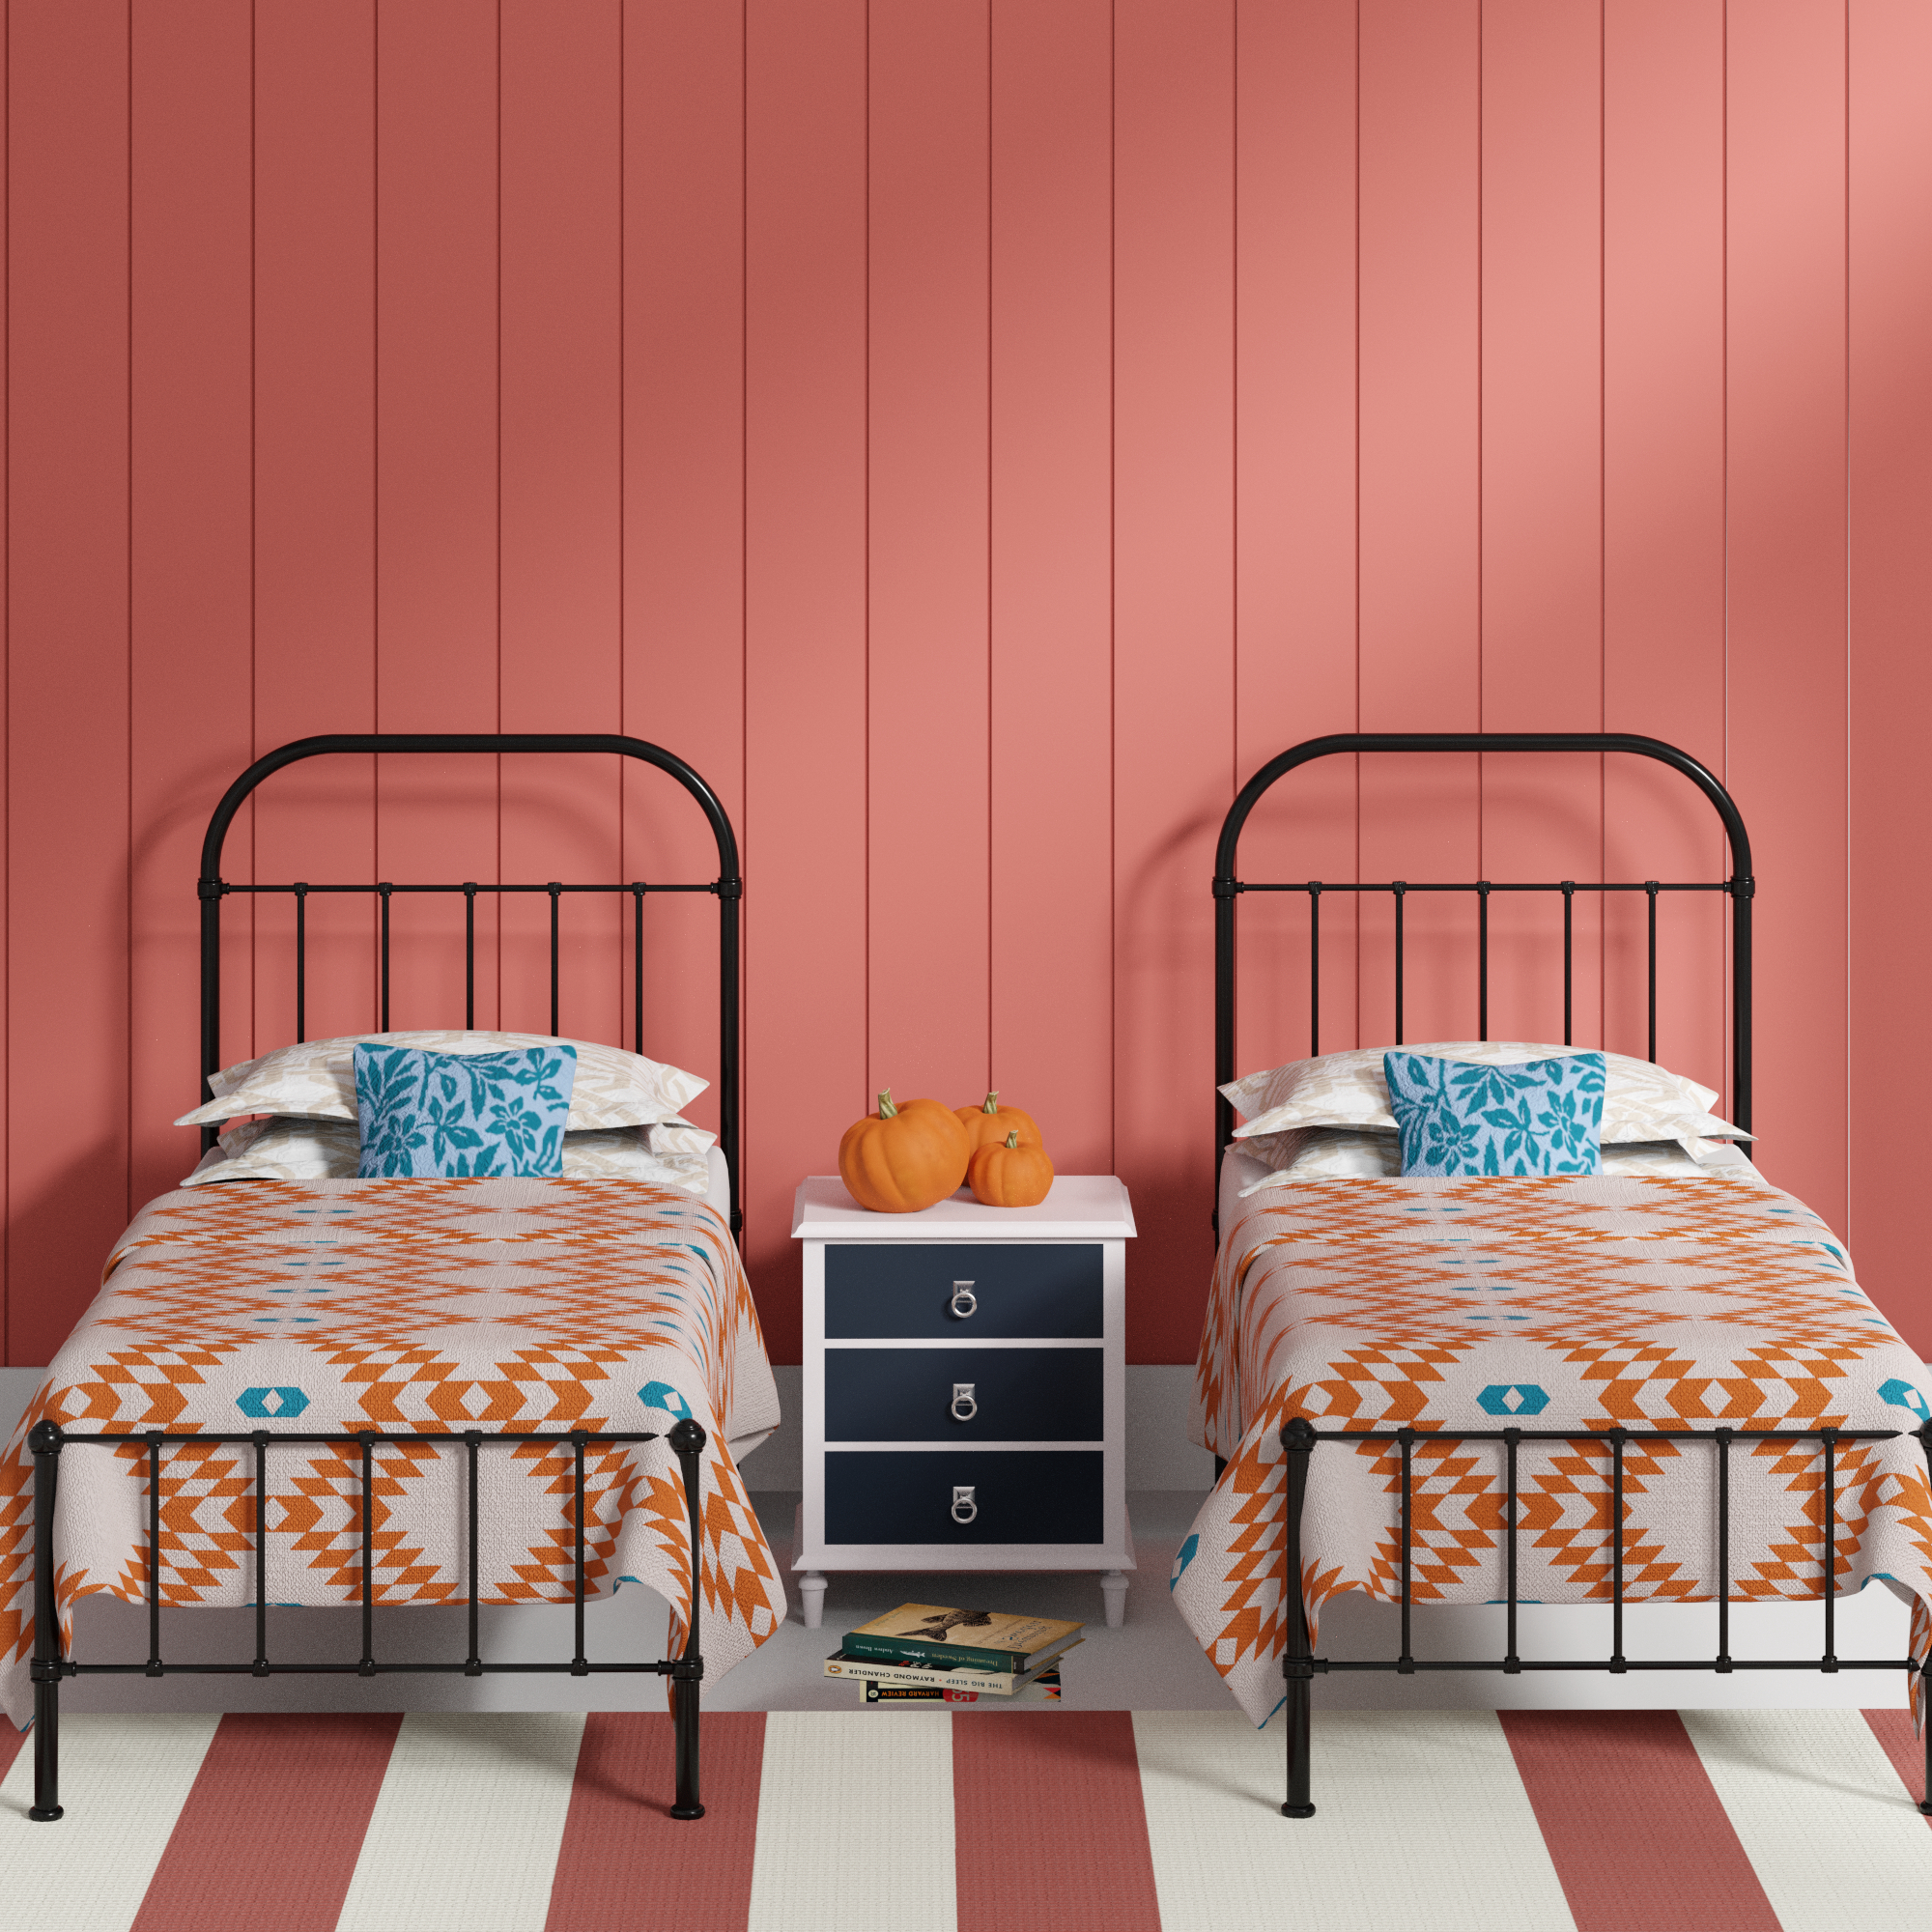 Solomon single iron bed - Image pink bedroom